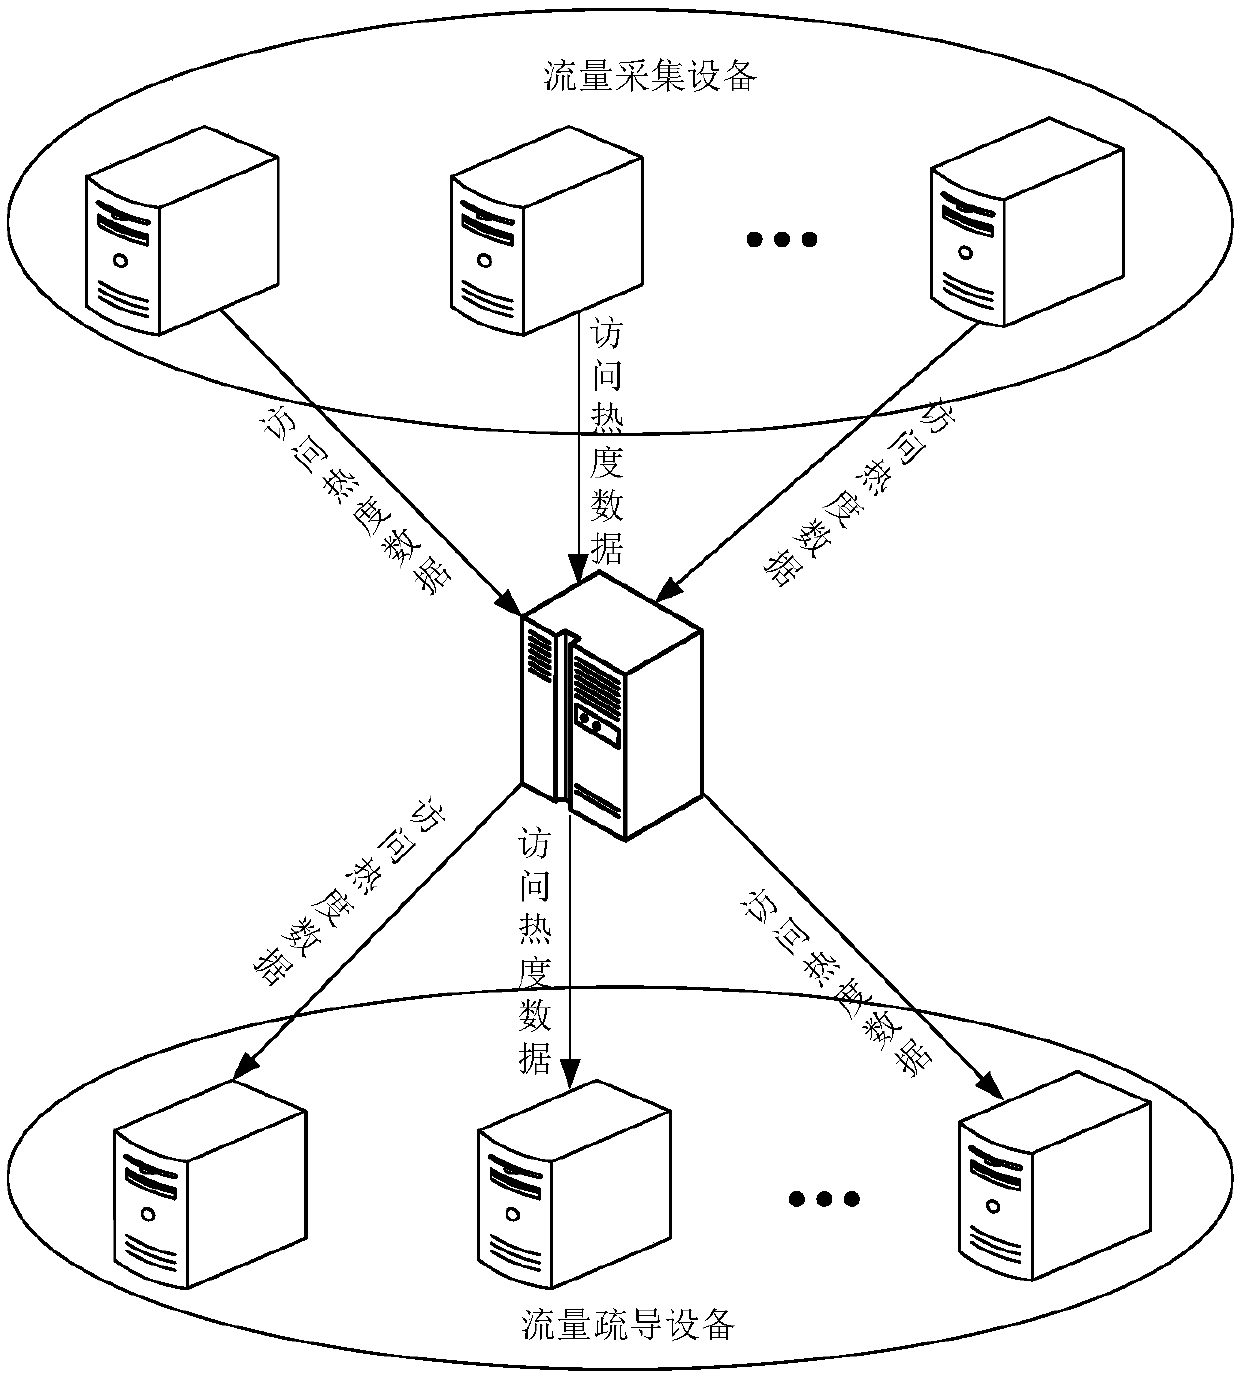 Service data transmission method and system